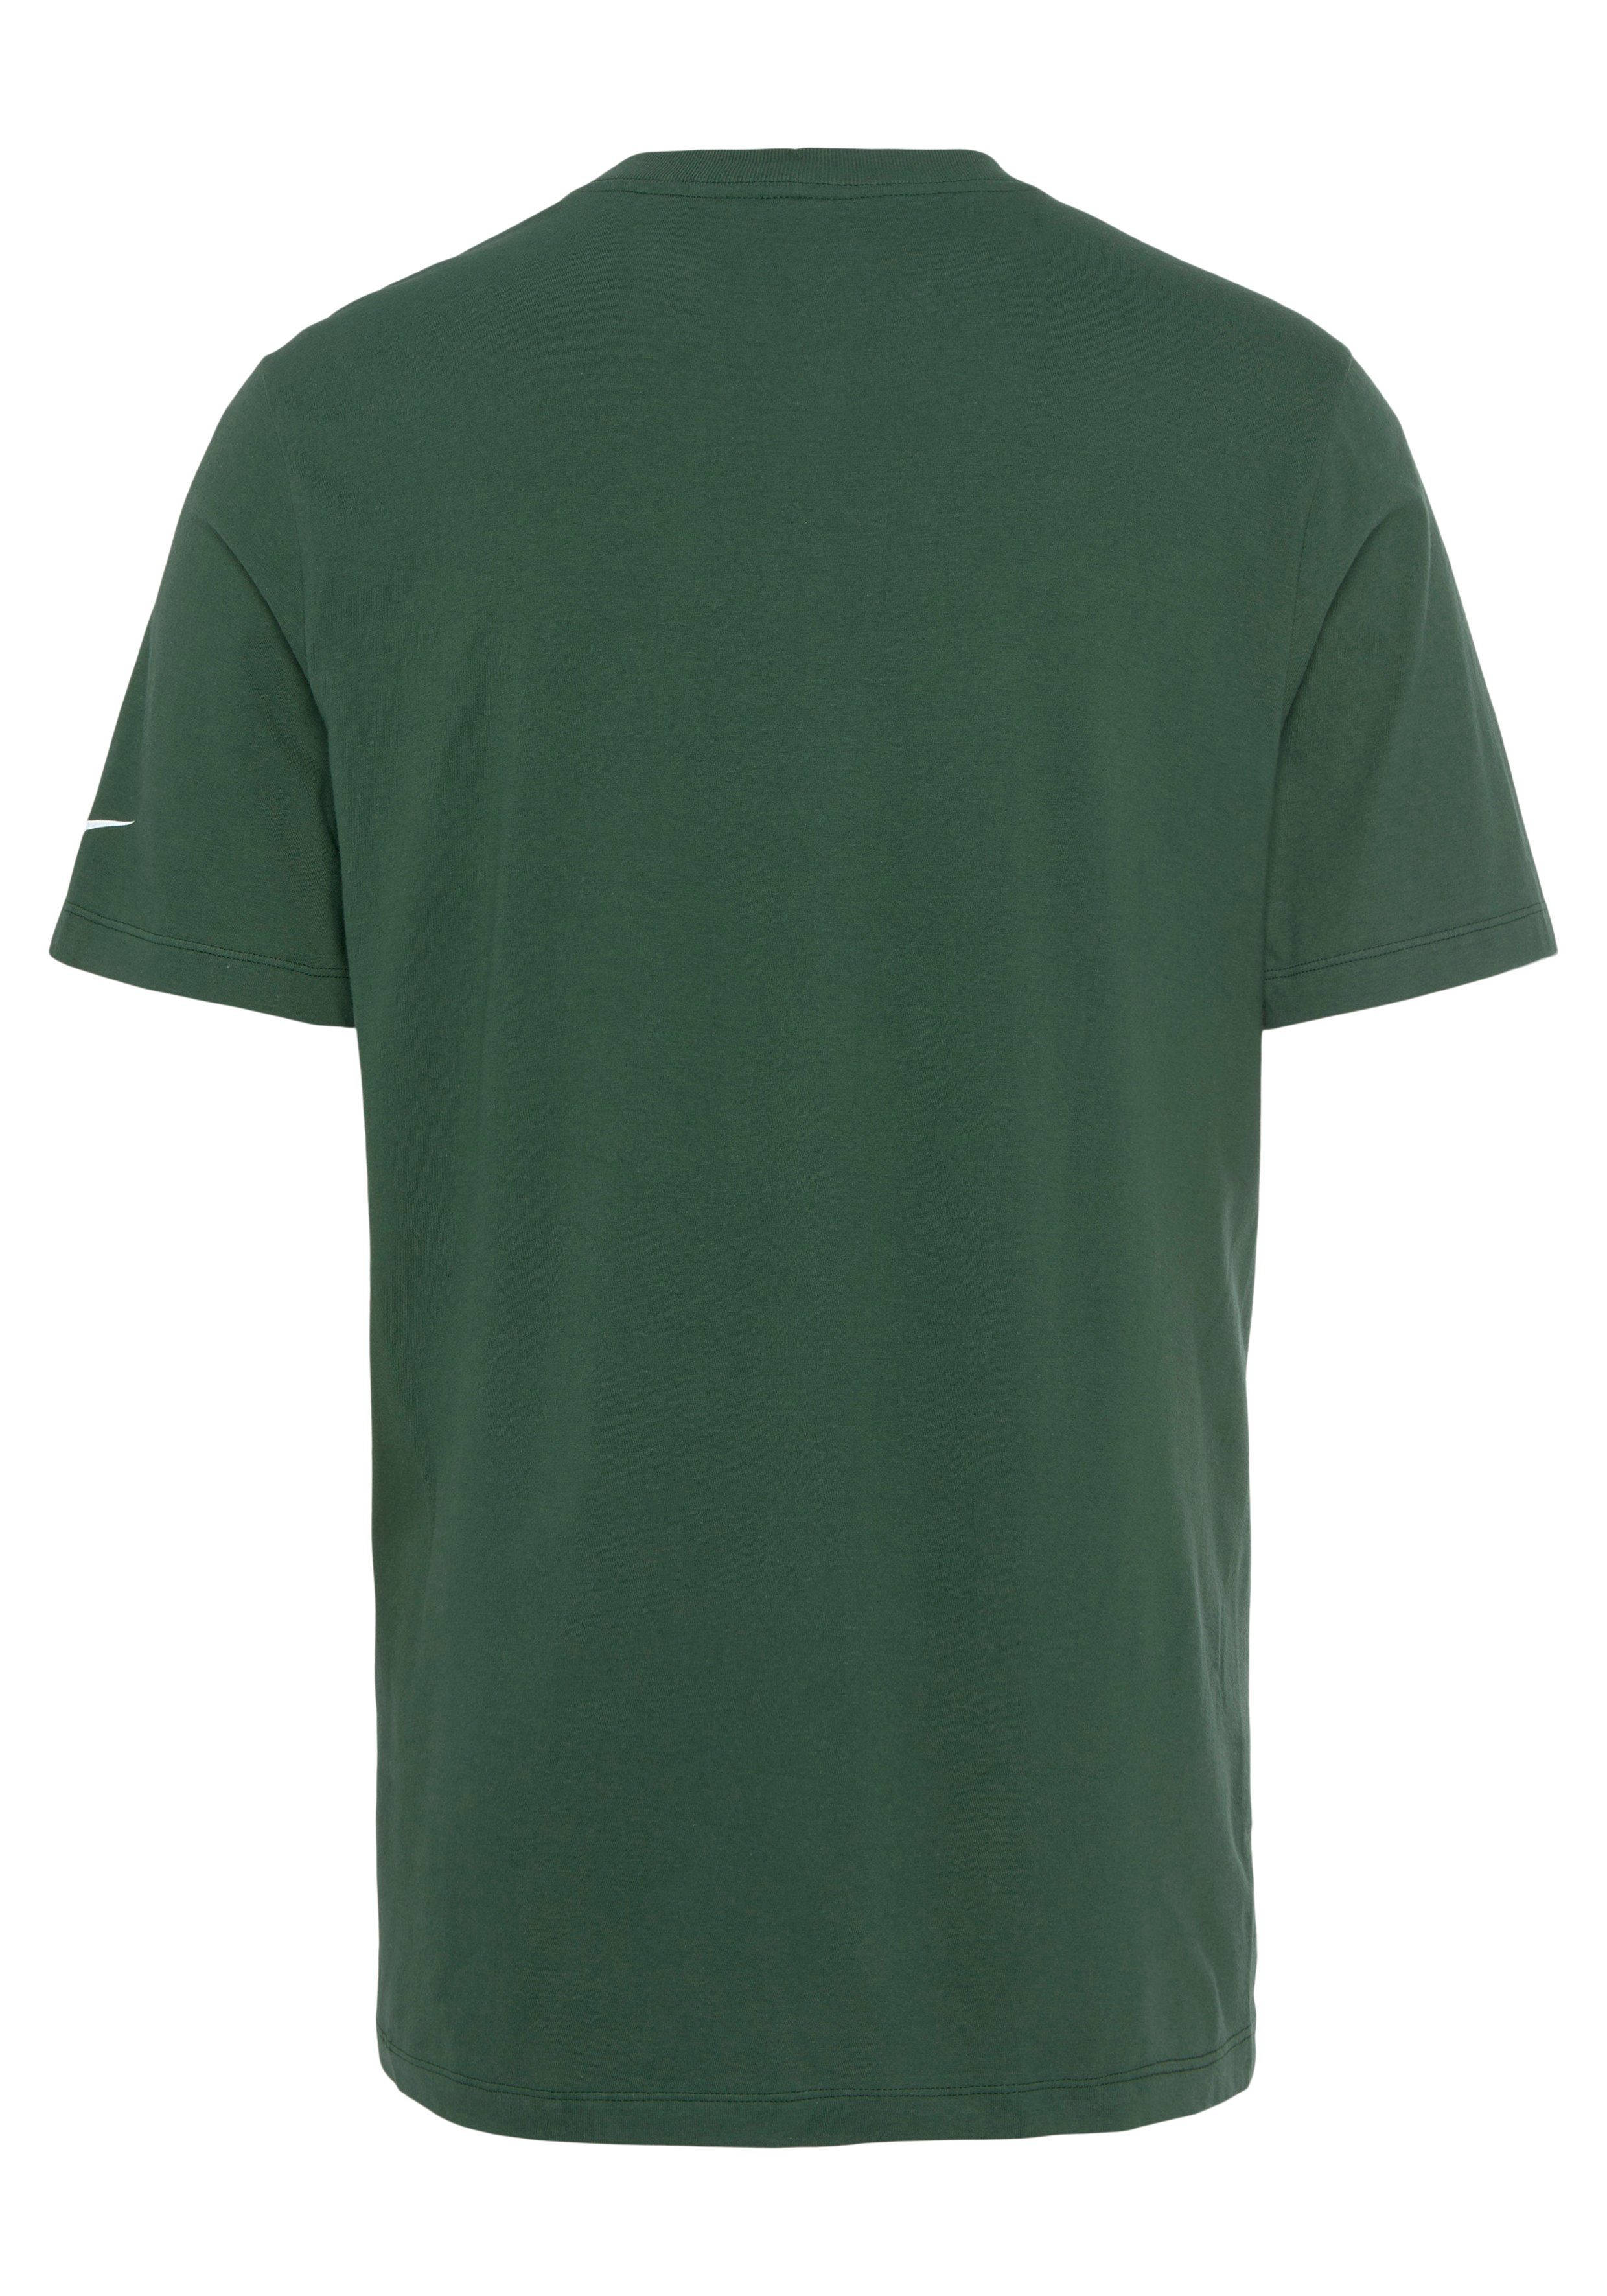 ESSENTIAL NIKE GREEN TEAM Nike PACKERS T-SHIRT T-Shirt NFL BAY